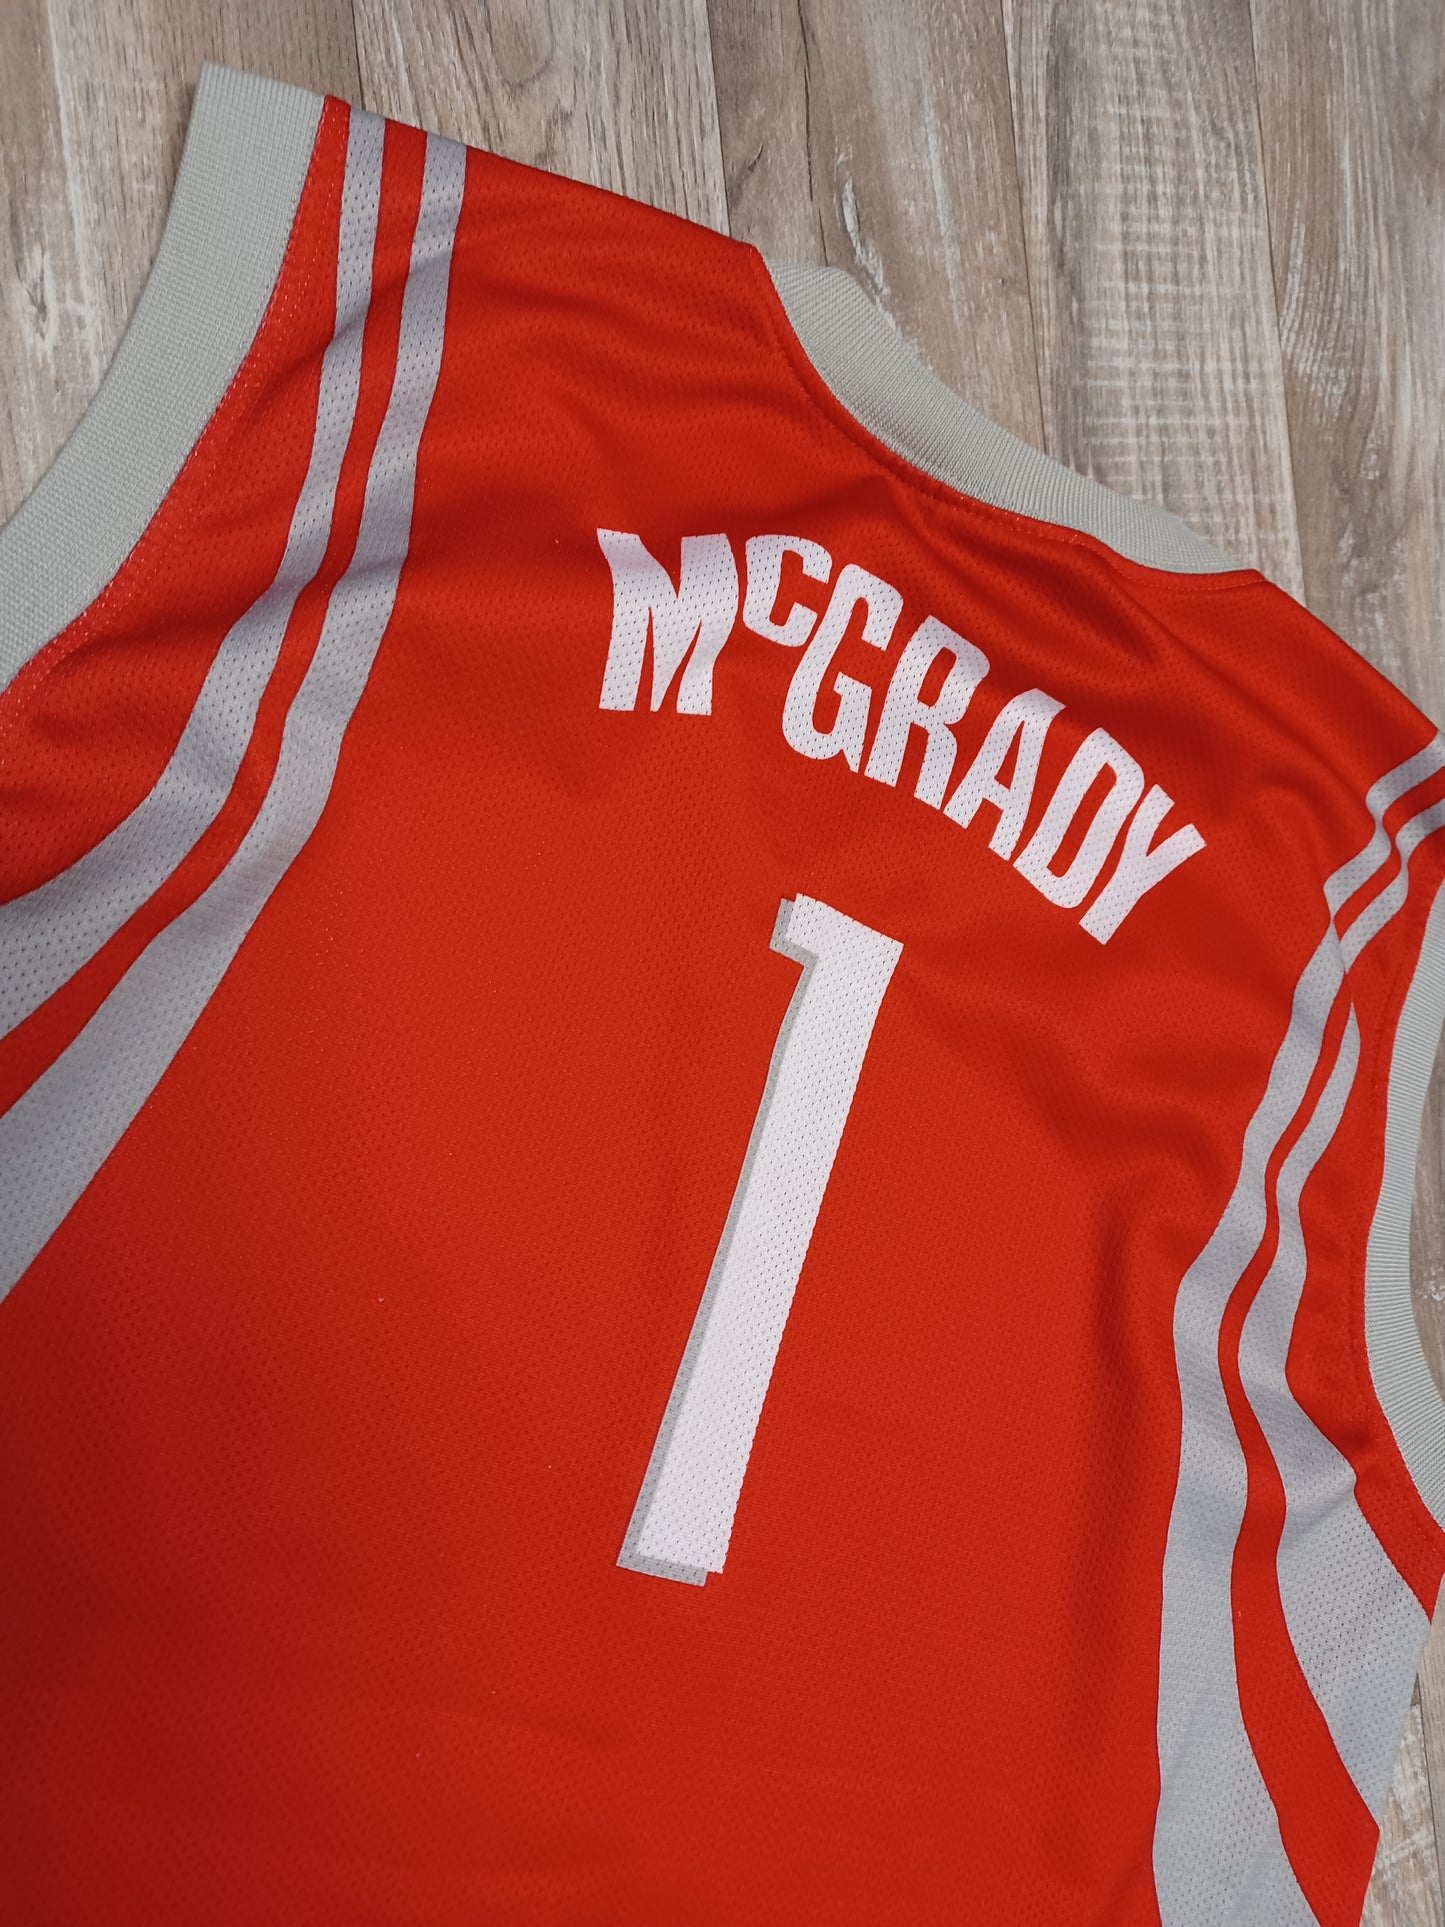 Tracy Mcgrady Houston Rockets Jersey Size Large